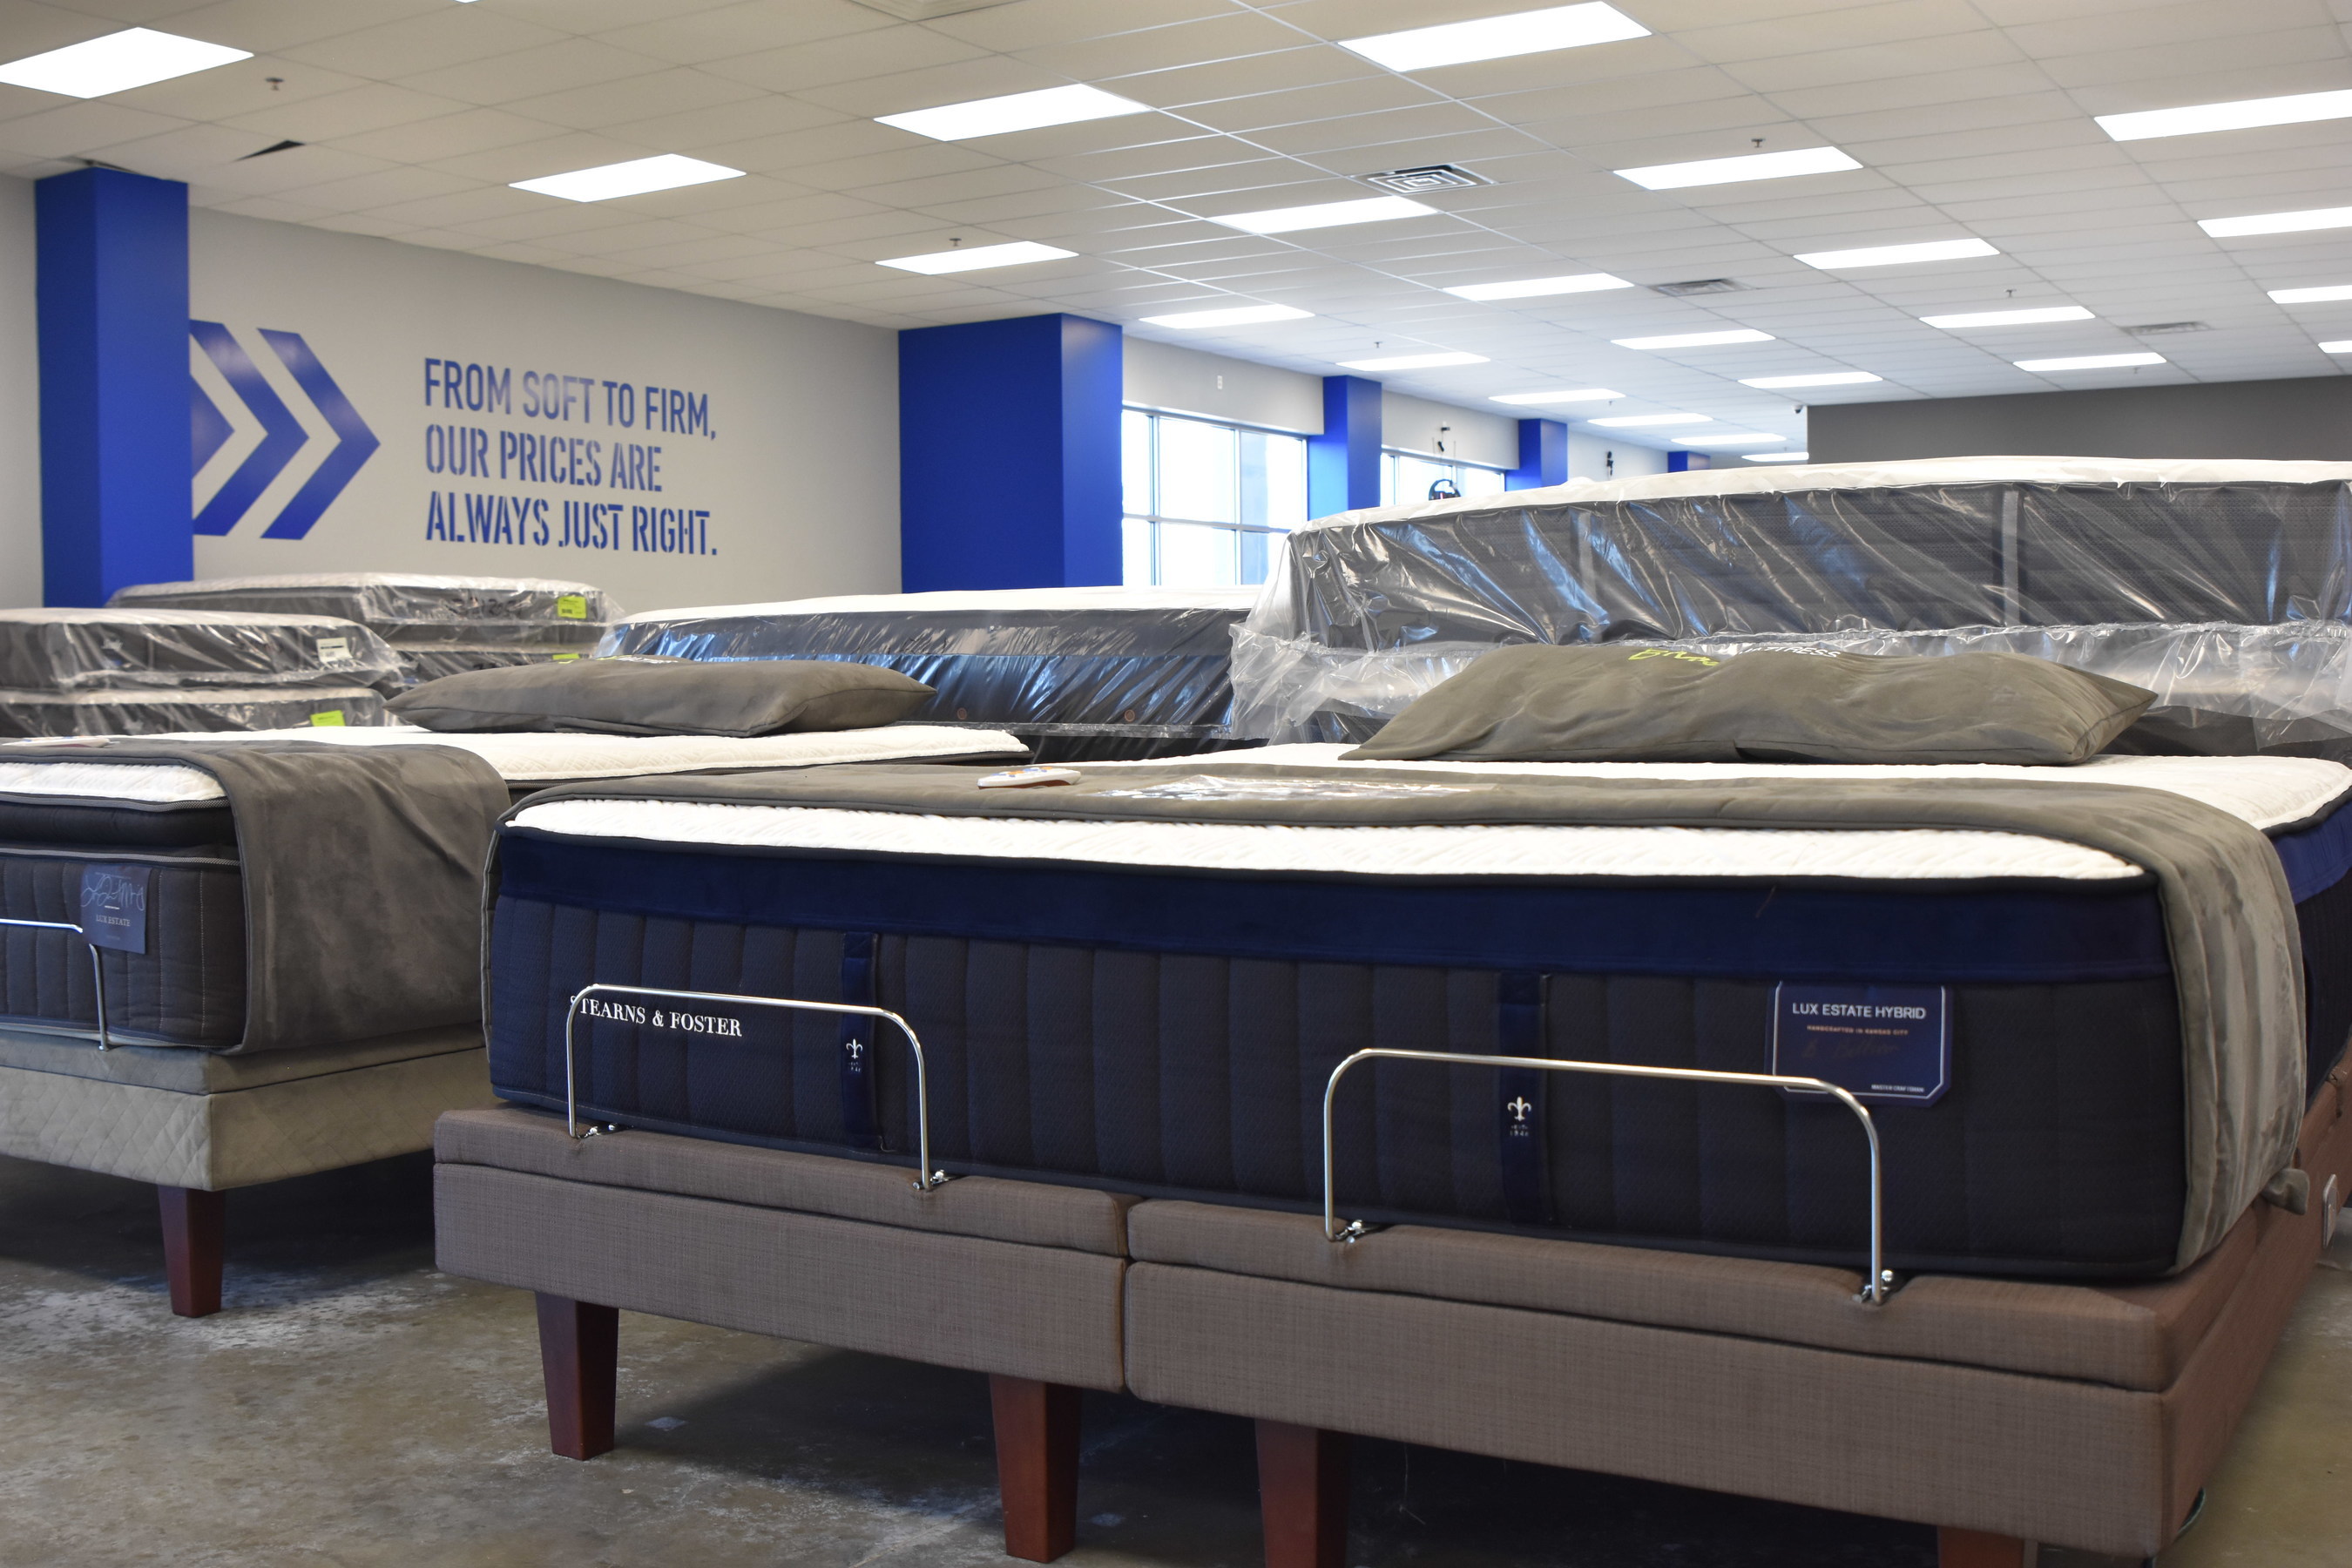 sleep solutions rio grande mattress